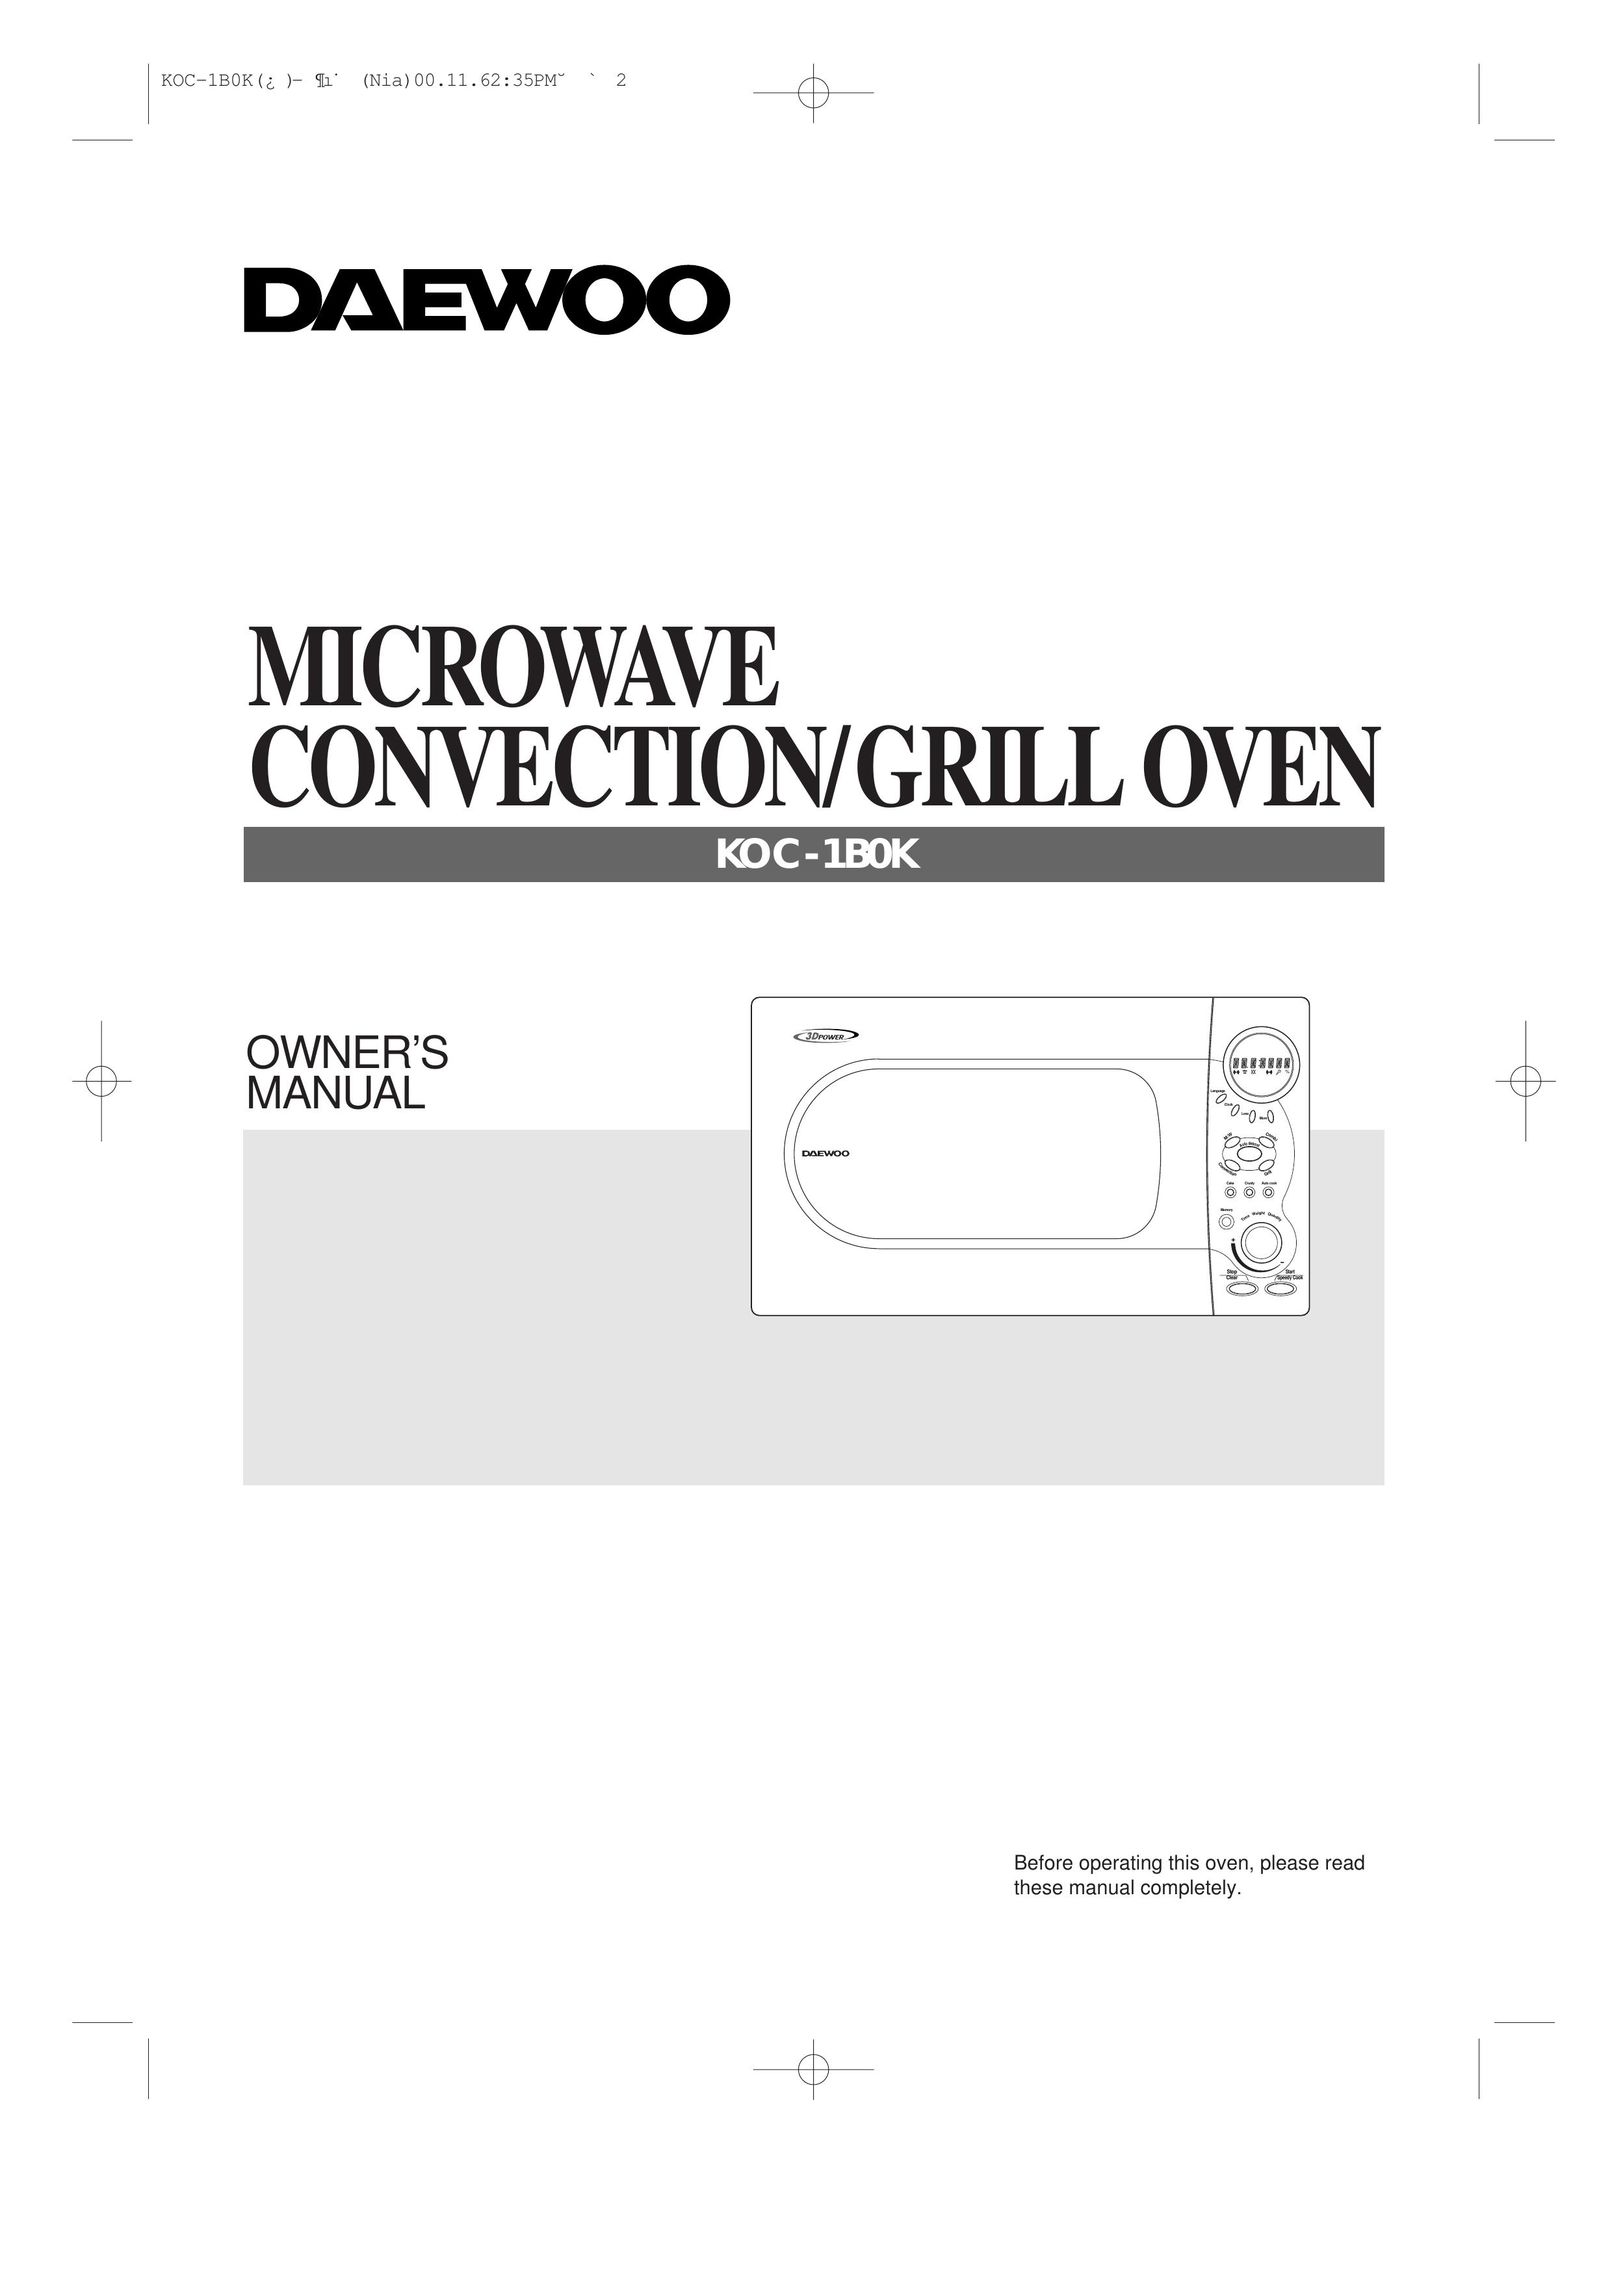 Daewoo KOC-1B0K Microwave Oven User Manual